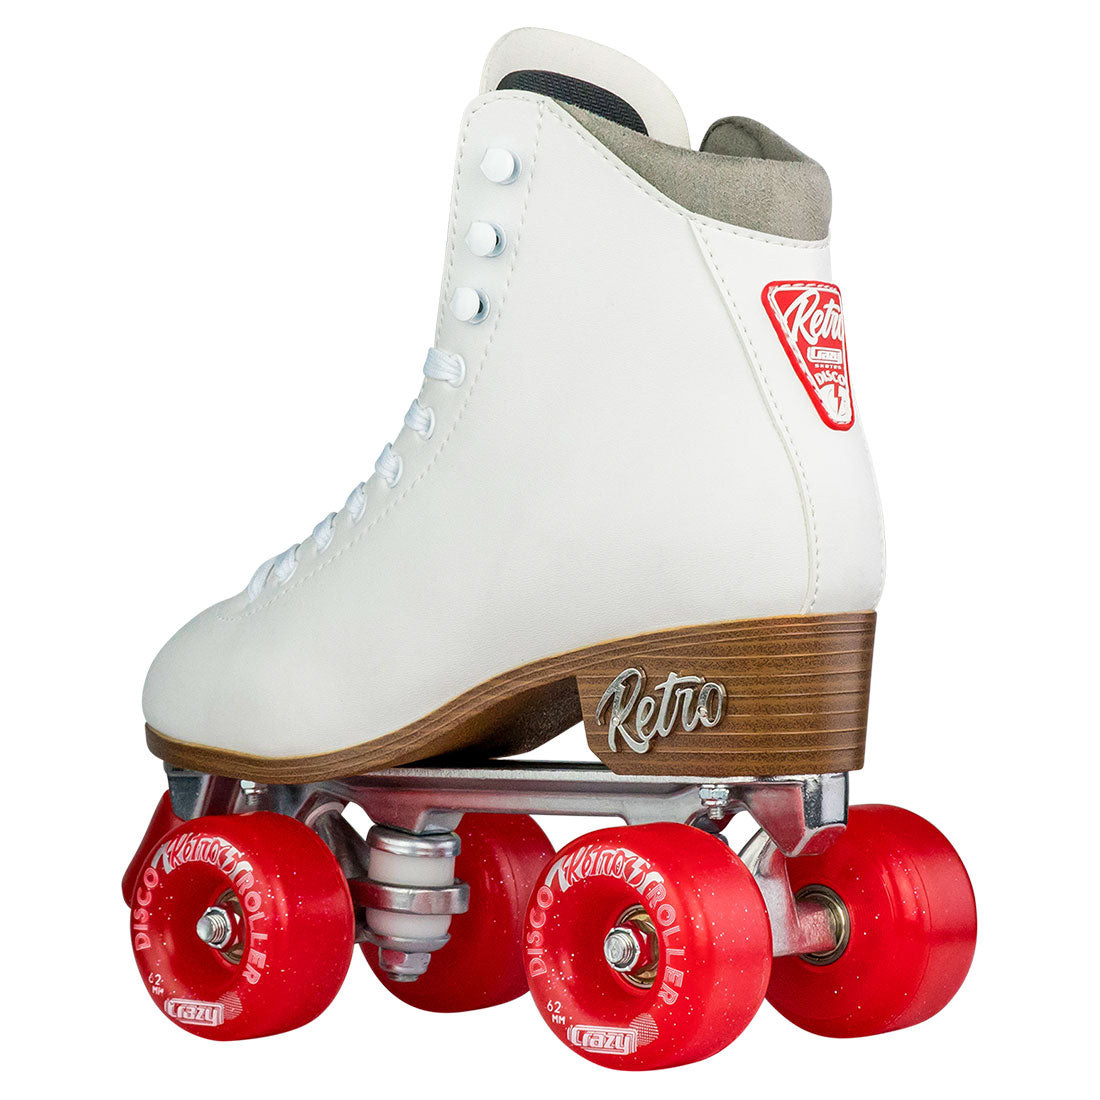 Crazy Retro Roller White - Adult Roller Skates